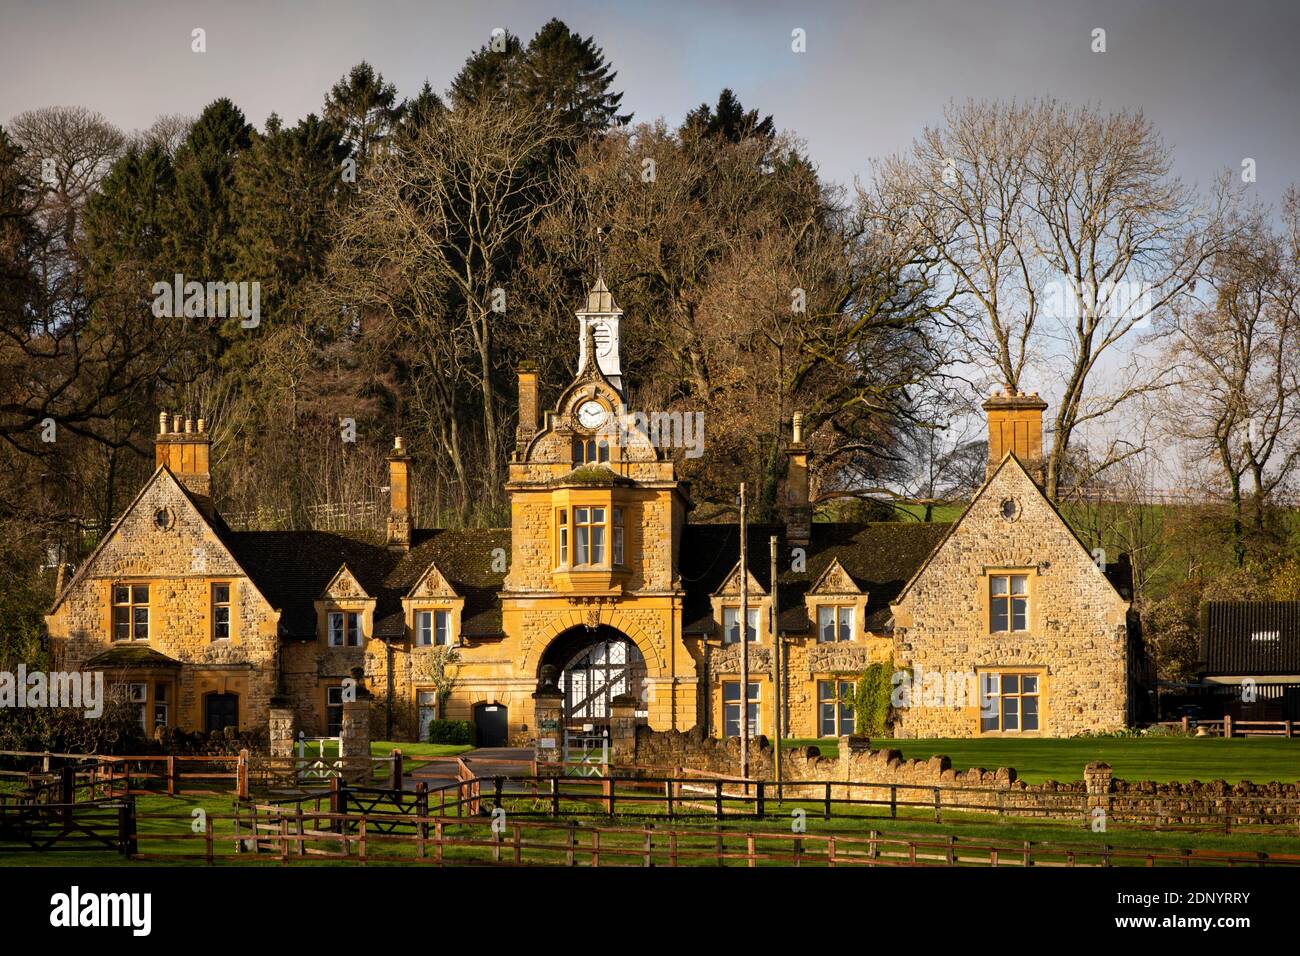 UK, Gloucestershire, Batsford village, imposing façade of Batsford Stud building Stock Photo